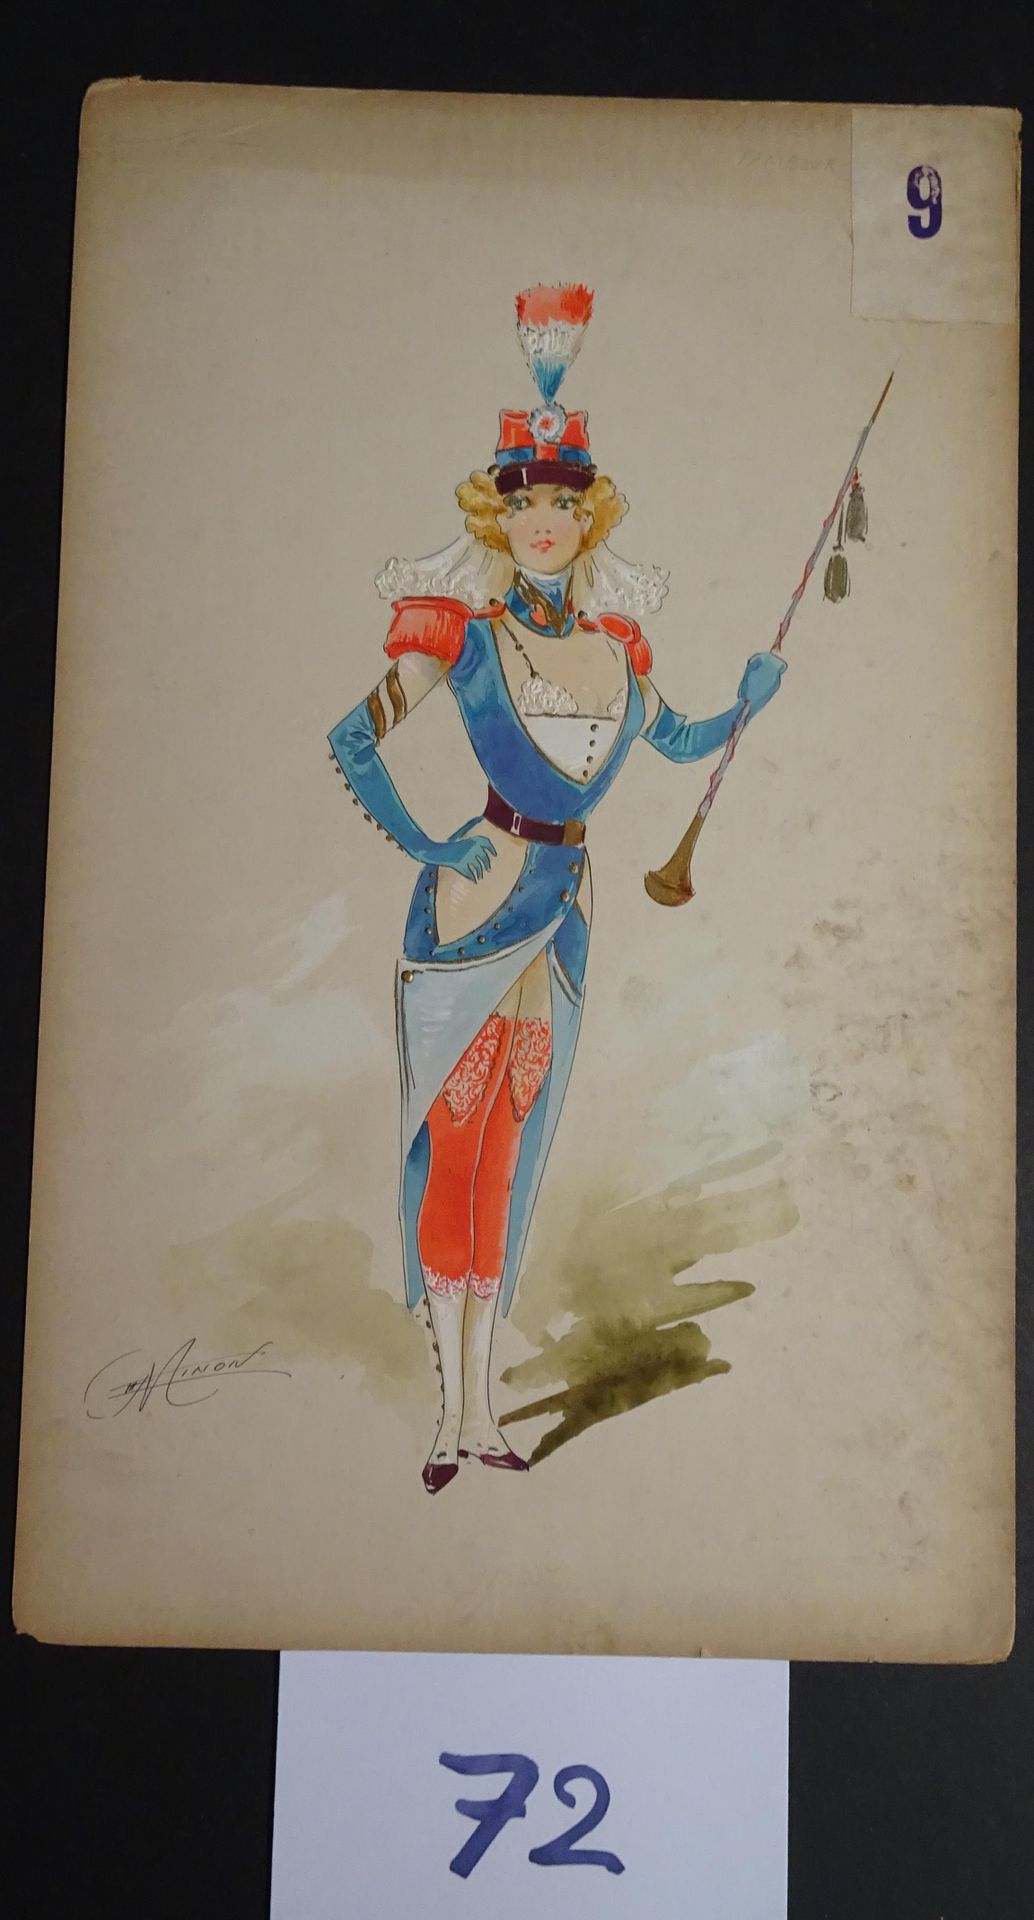 MINON 铭恩公司

"步兵"，约1880年。为一本杂志制作的服装模型。水彩水粉，印度墨水，已签名。40 x 25厘米。